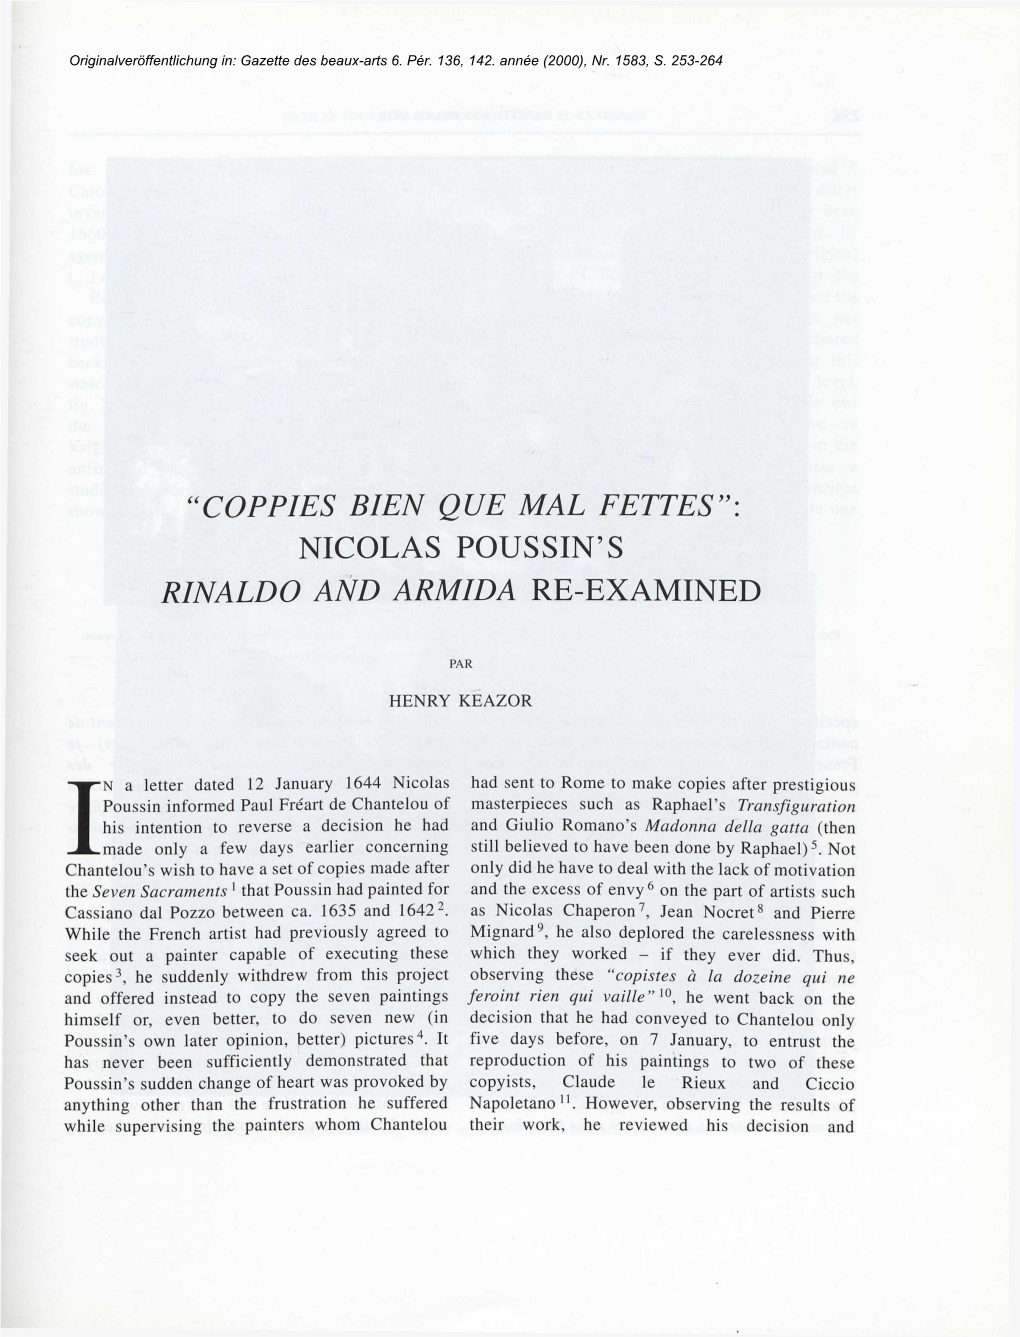 "Coppies Bien Que Mal Fettes": Nicolas Poussin's Rinaldo and Armida Re-Examined